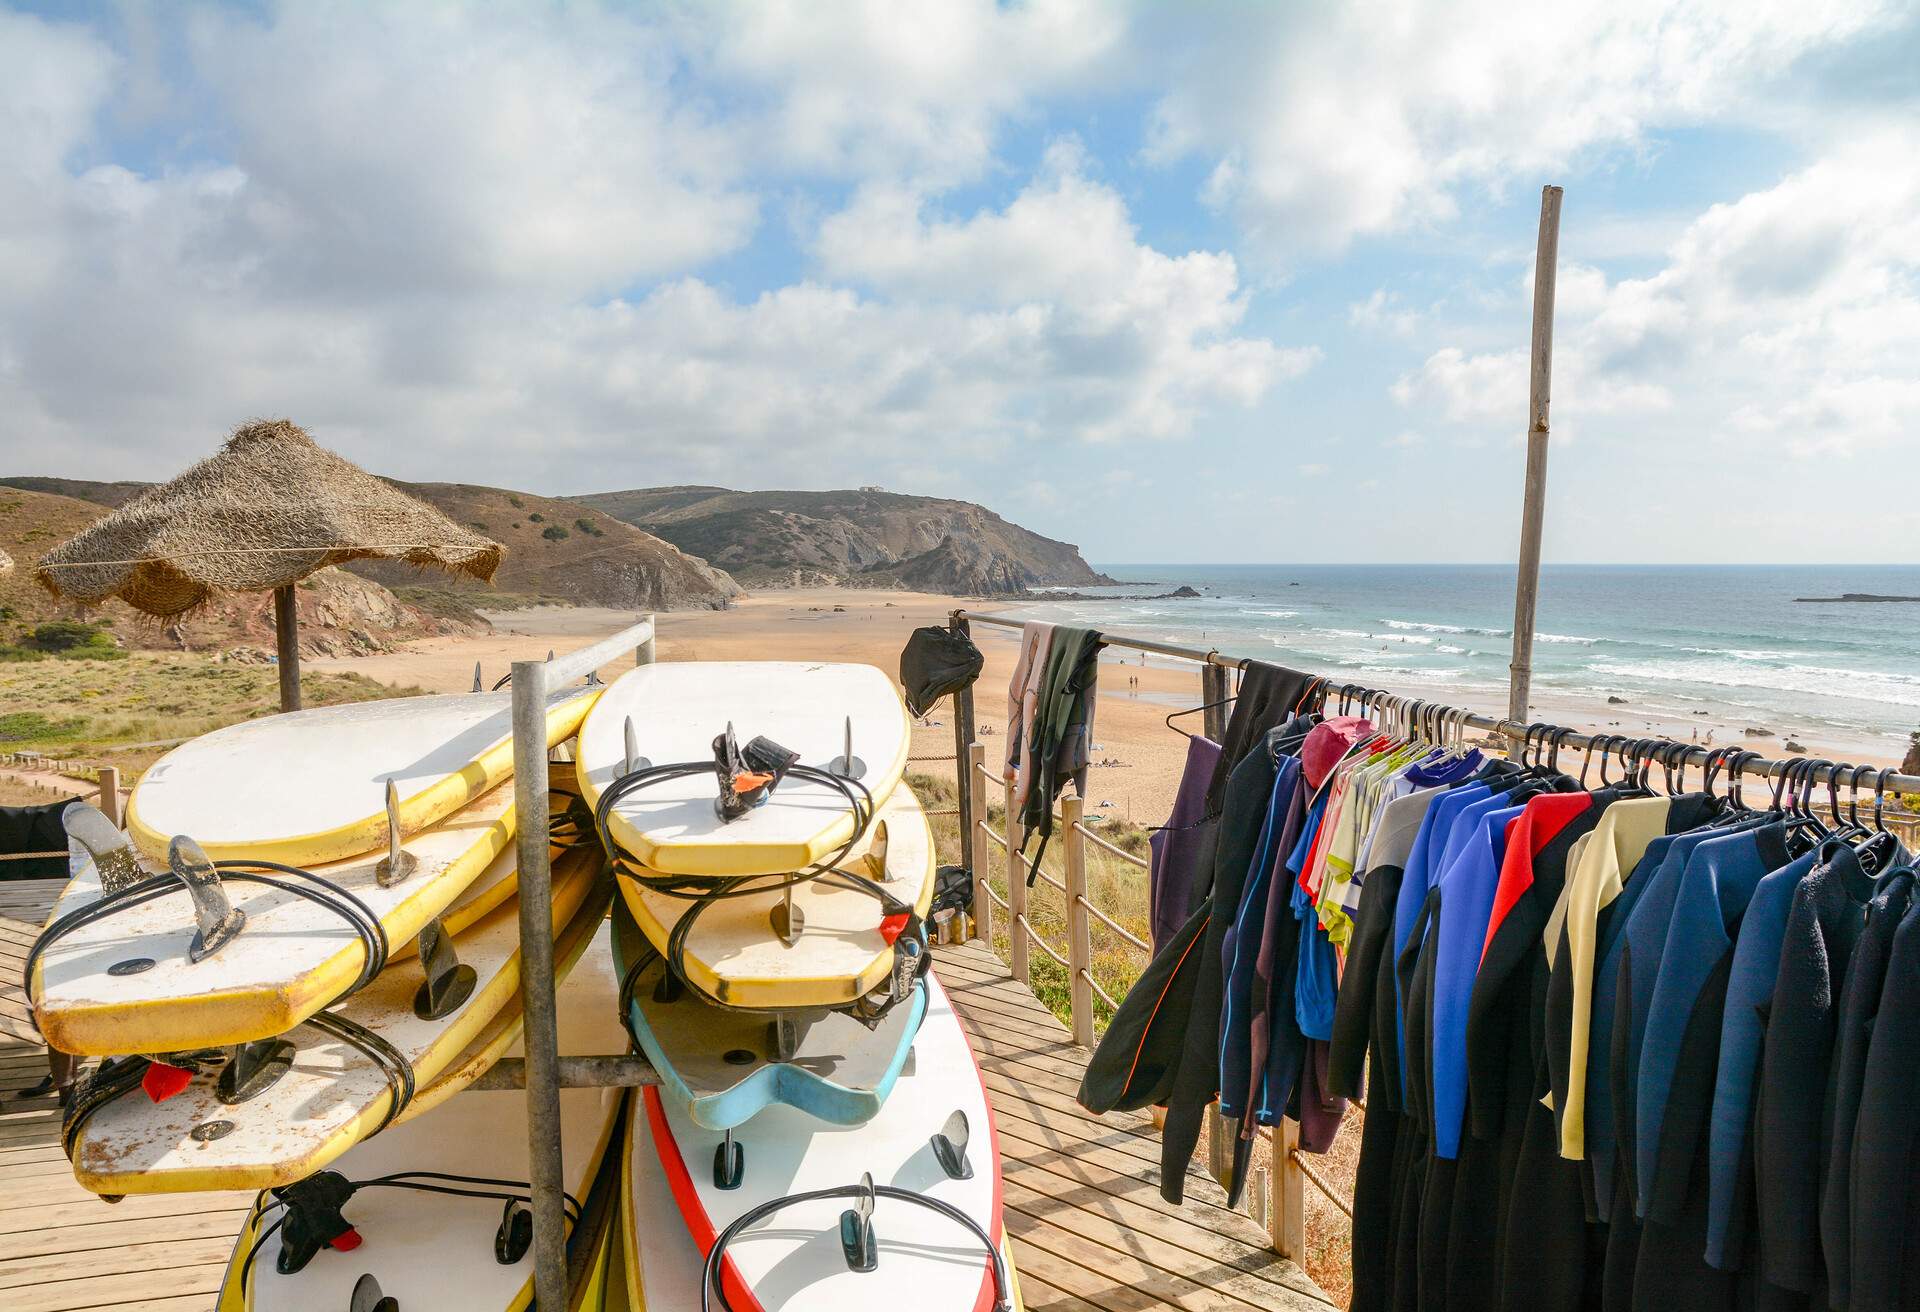 Surfboards at Praia do Amado, Beach and Surfer spot, Algarve Portugal